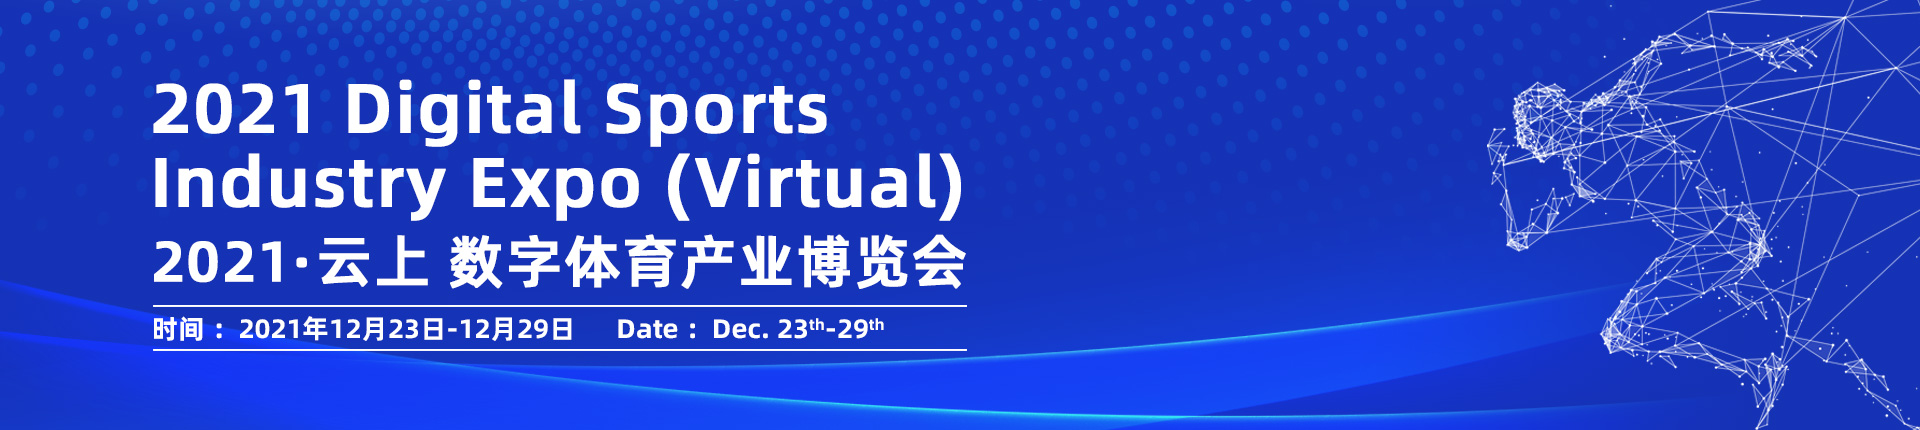 2021 World Digital Sports Industry Expo (Virtual)